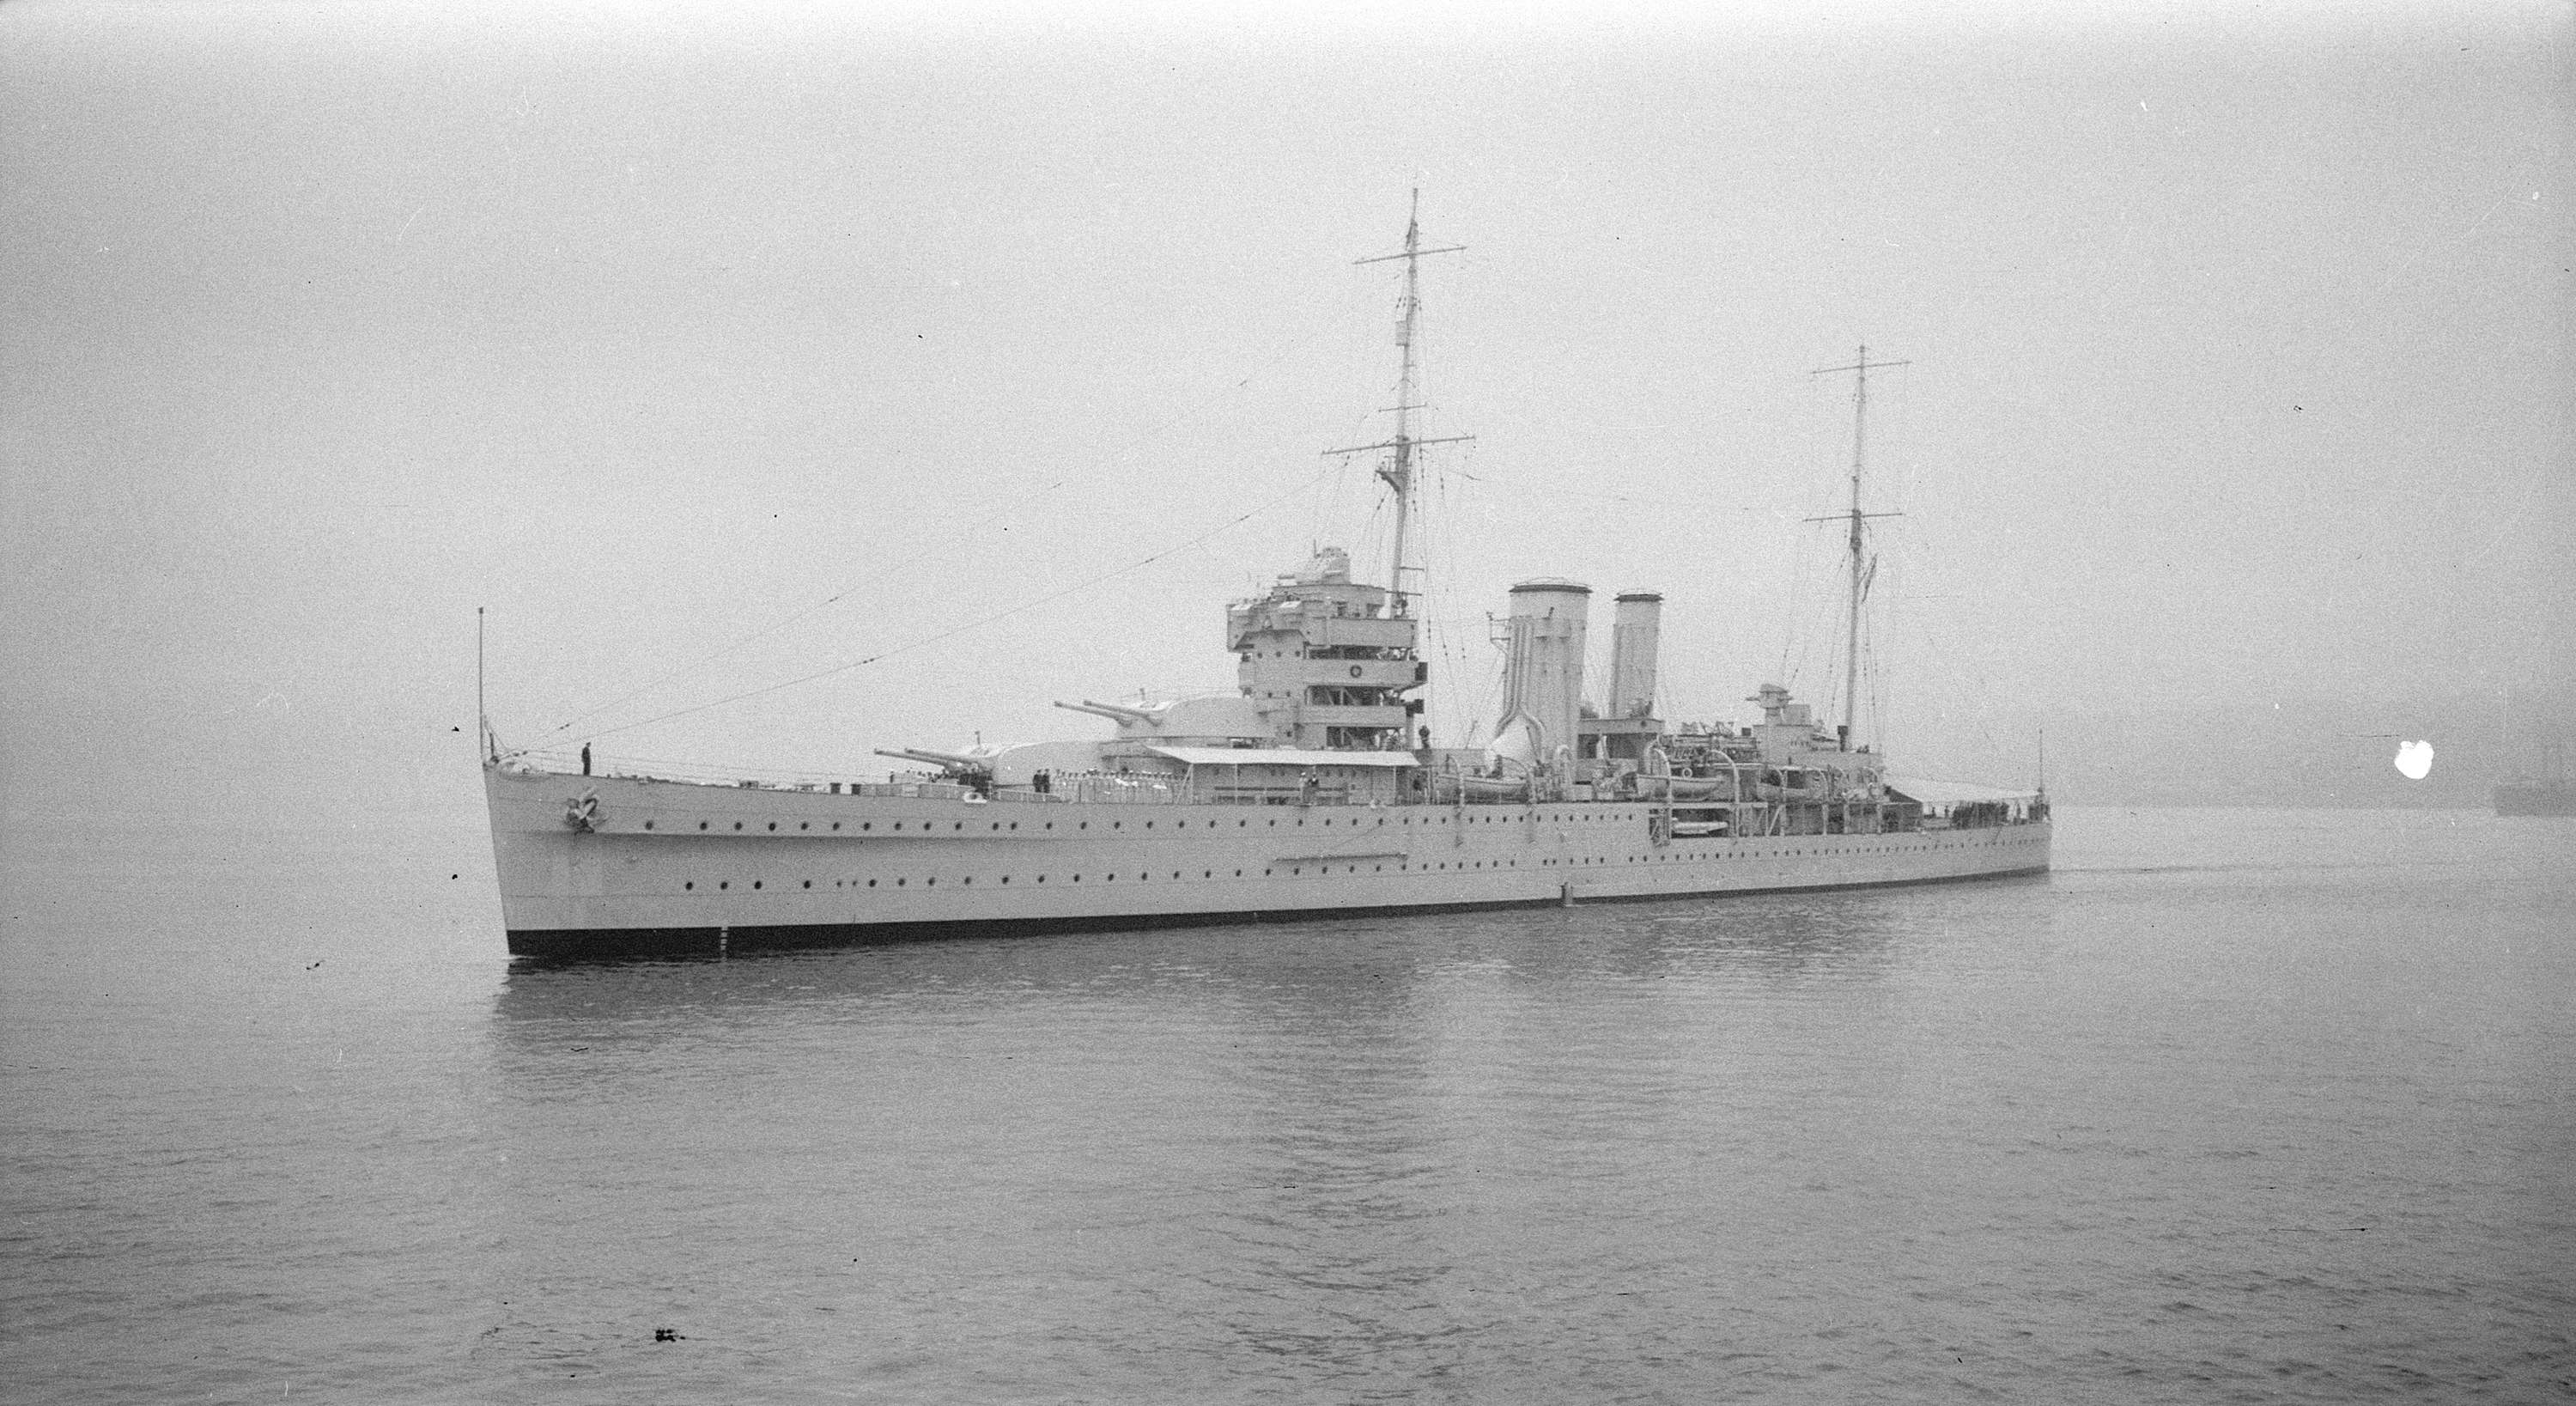 HMS York at Vancouver, British Columbia, Canada, 10 Aug 1938